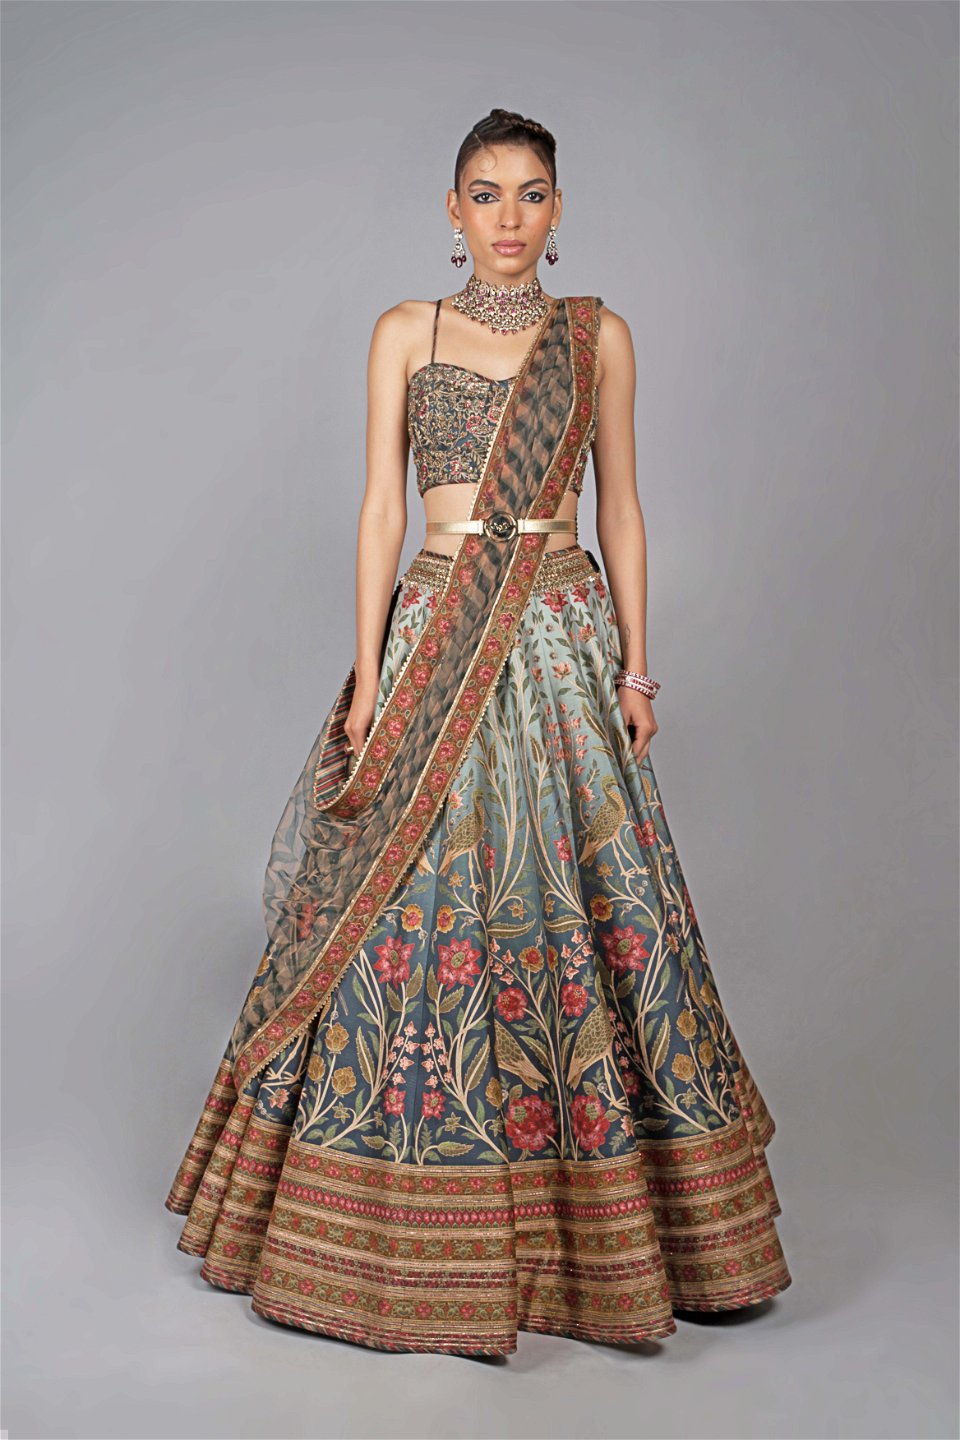 tabrez Indi Girls Maxi/Full Length Festive/Wedding Dress Price in